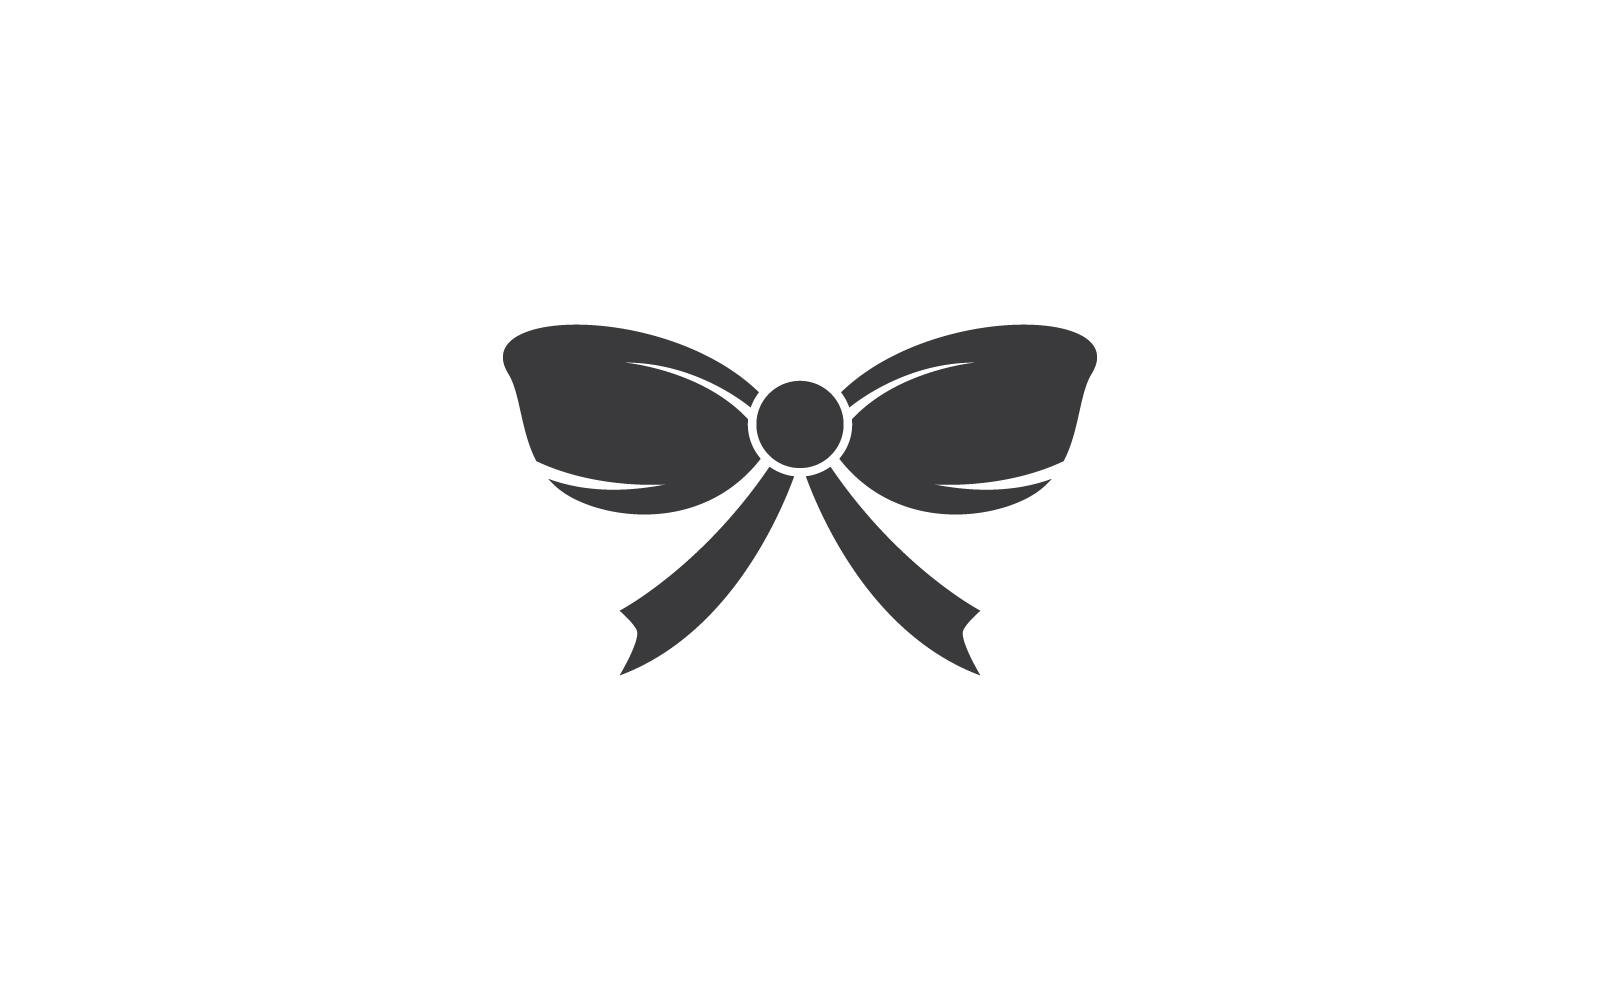 Bow tie icon logo vector flat design